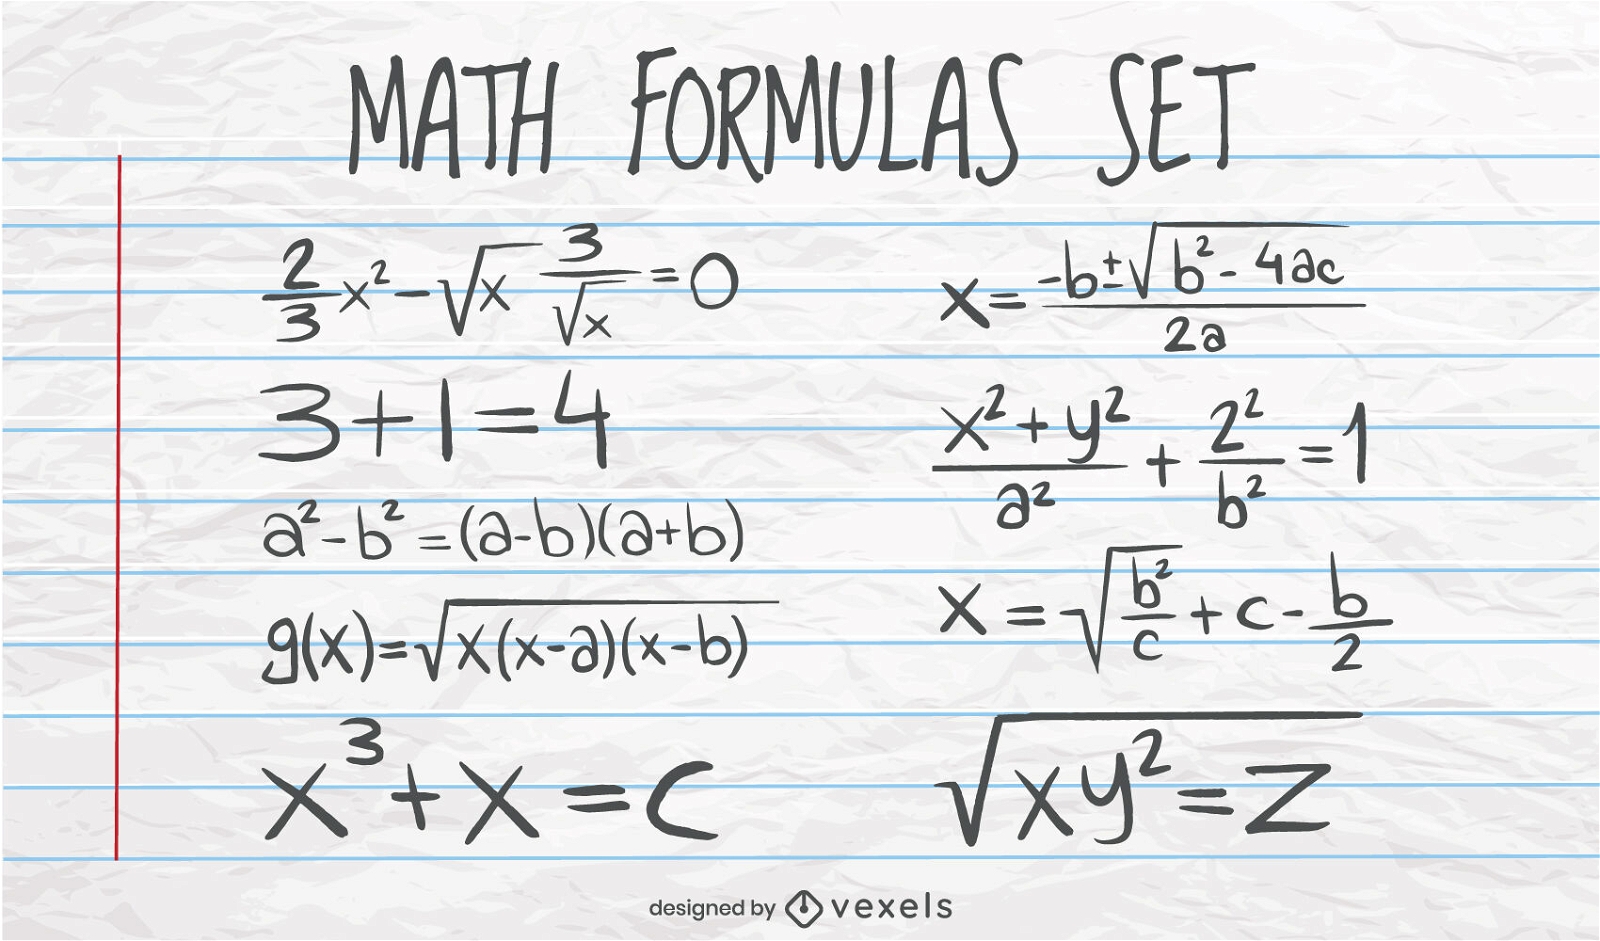 Math formulas set